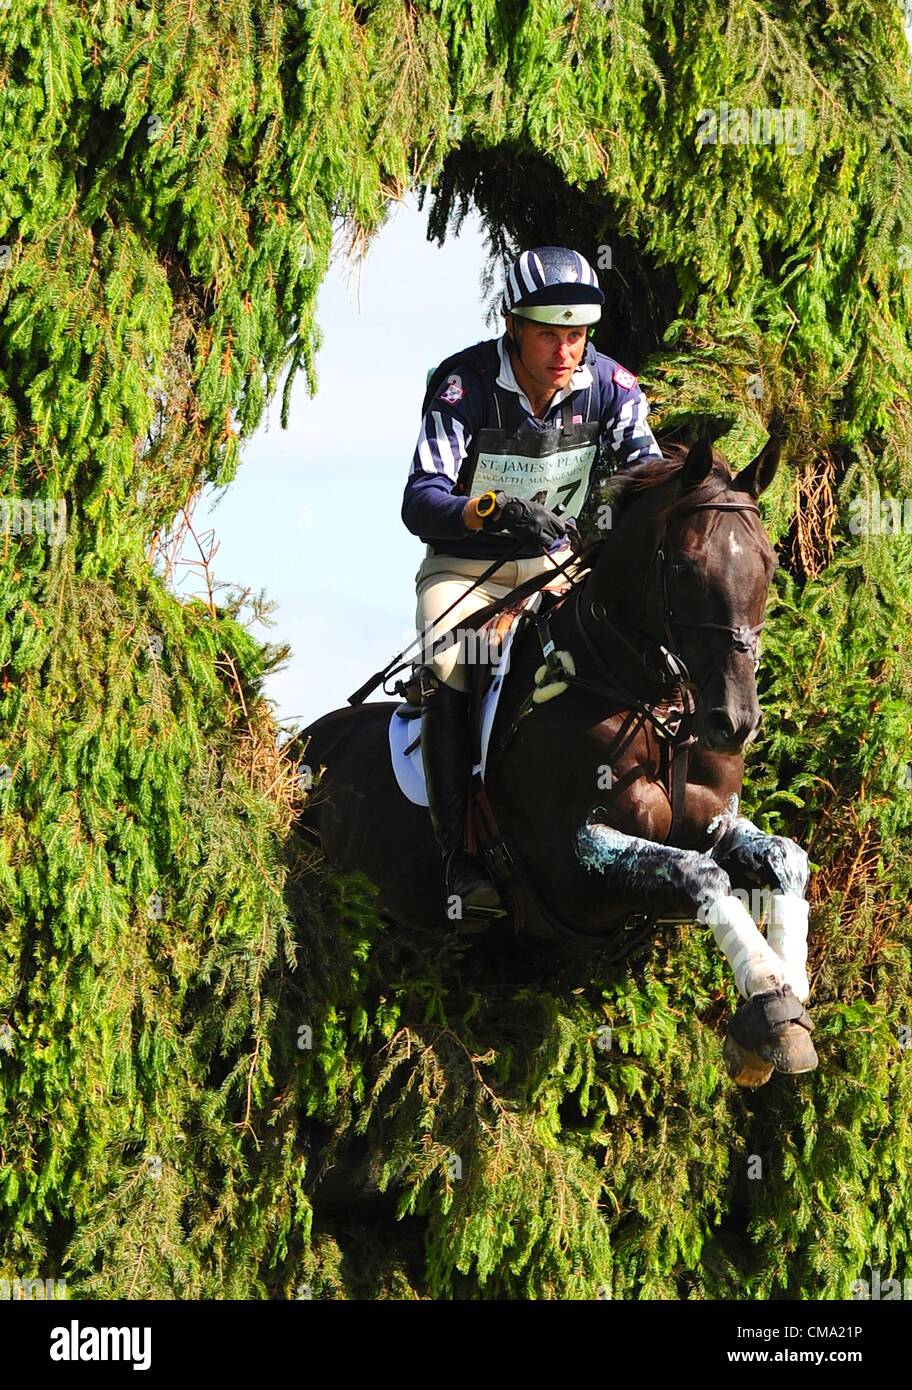 01.07.2012 Barbury Castle International Horse Trials, Marlborough, England. America's Boyd Martin riding Remington XXV during the CIC*** Cross Country. Stock Photo